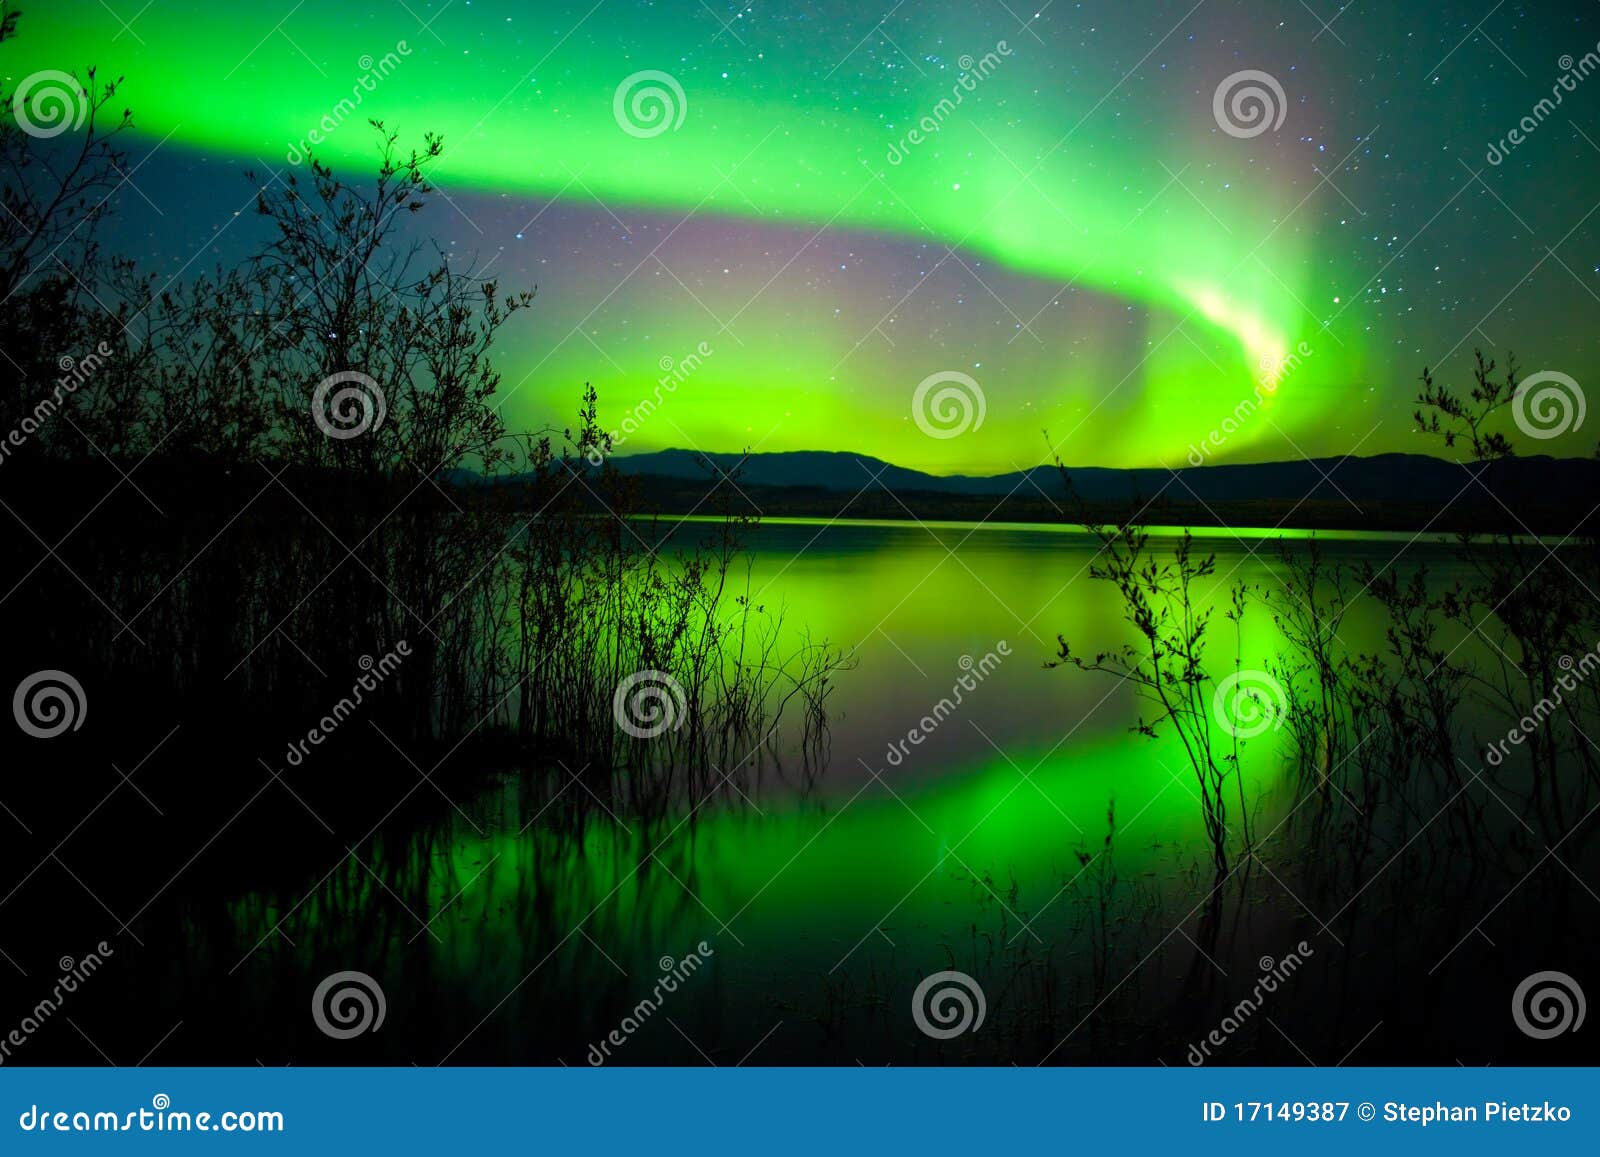 northern lights mirrored on lake